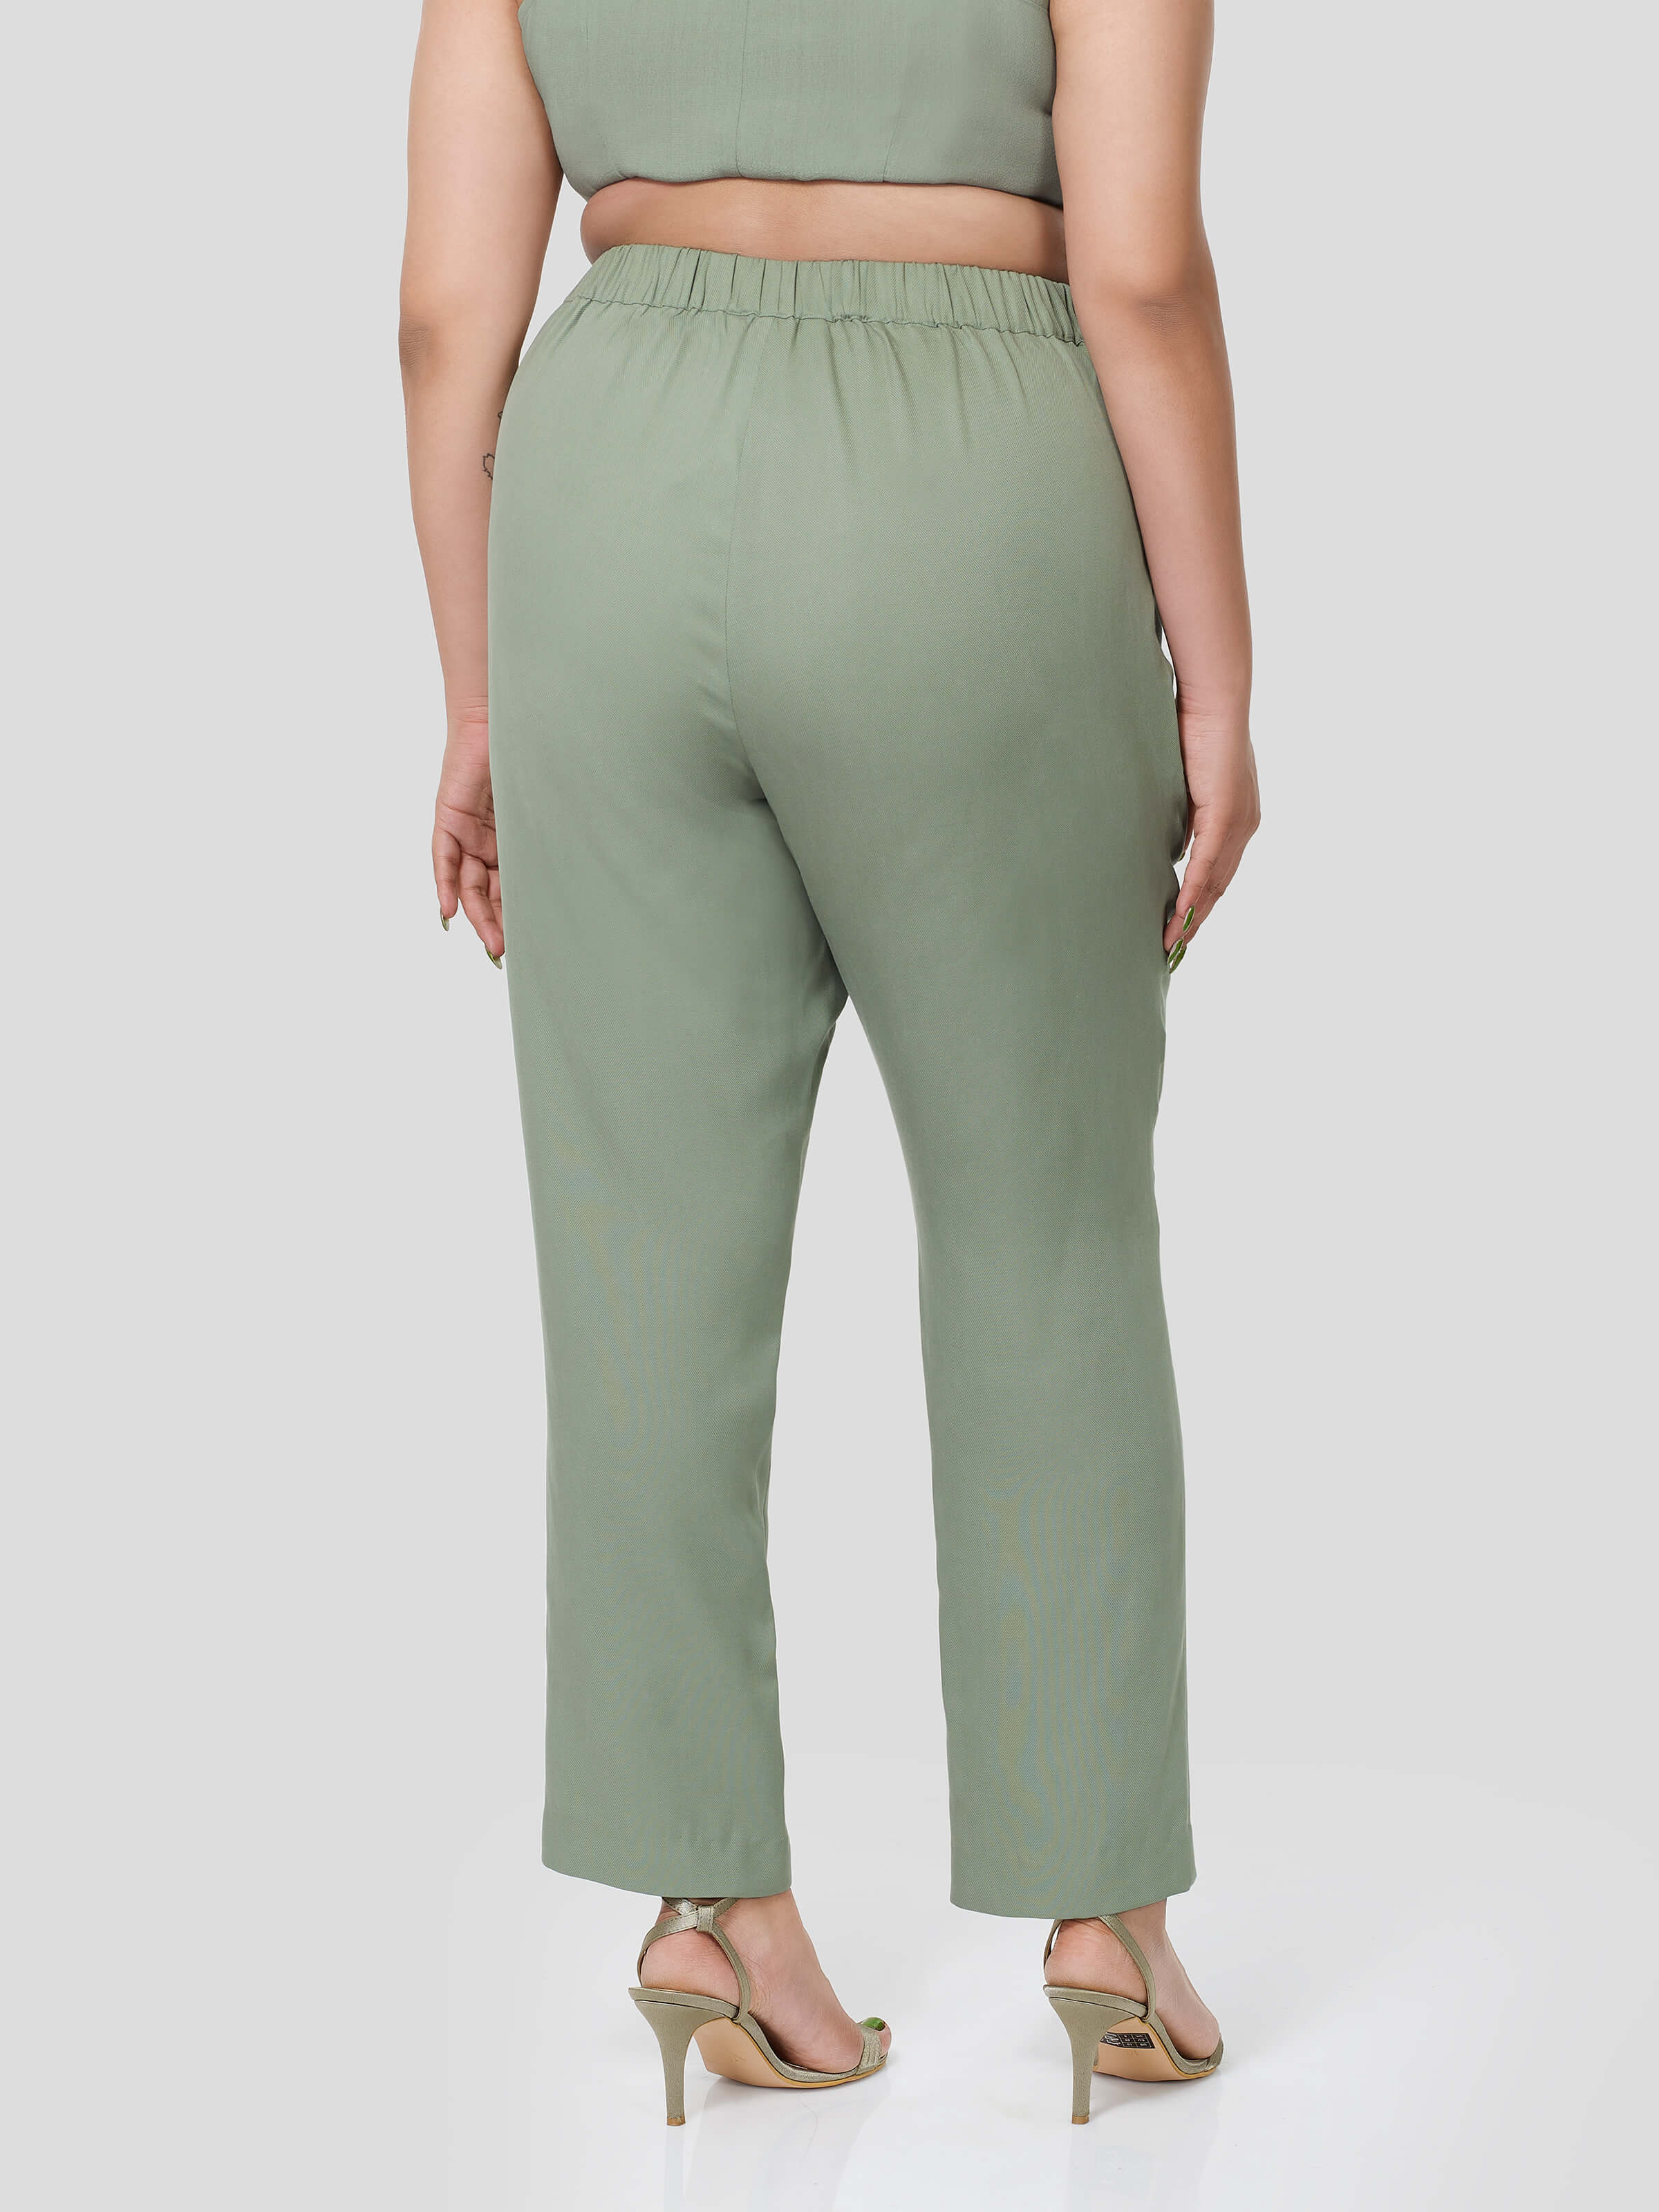 Green Crop Top with Narrow Pants - Zest Mélange 